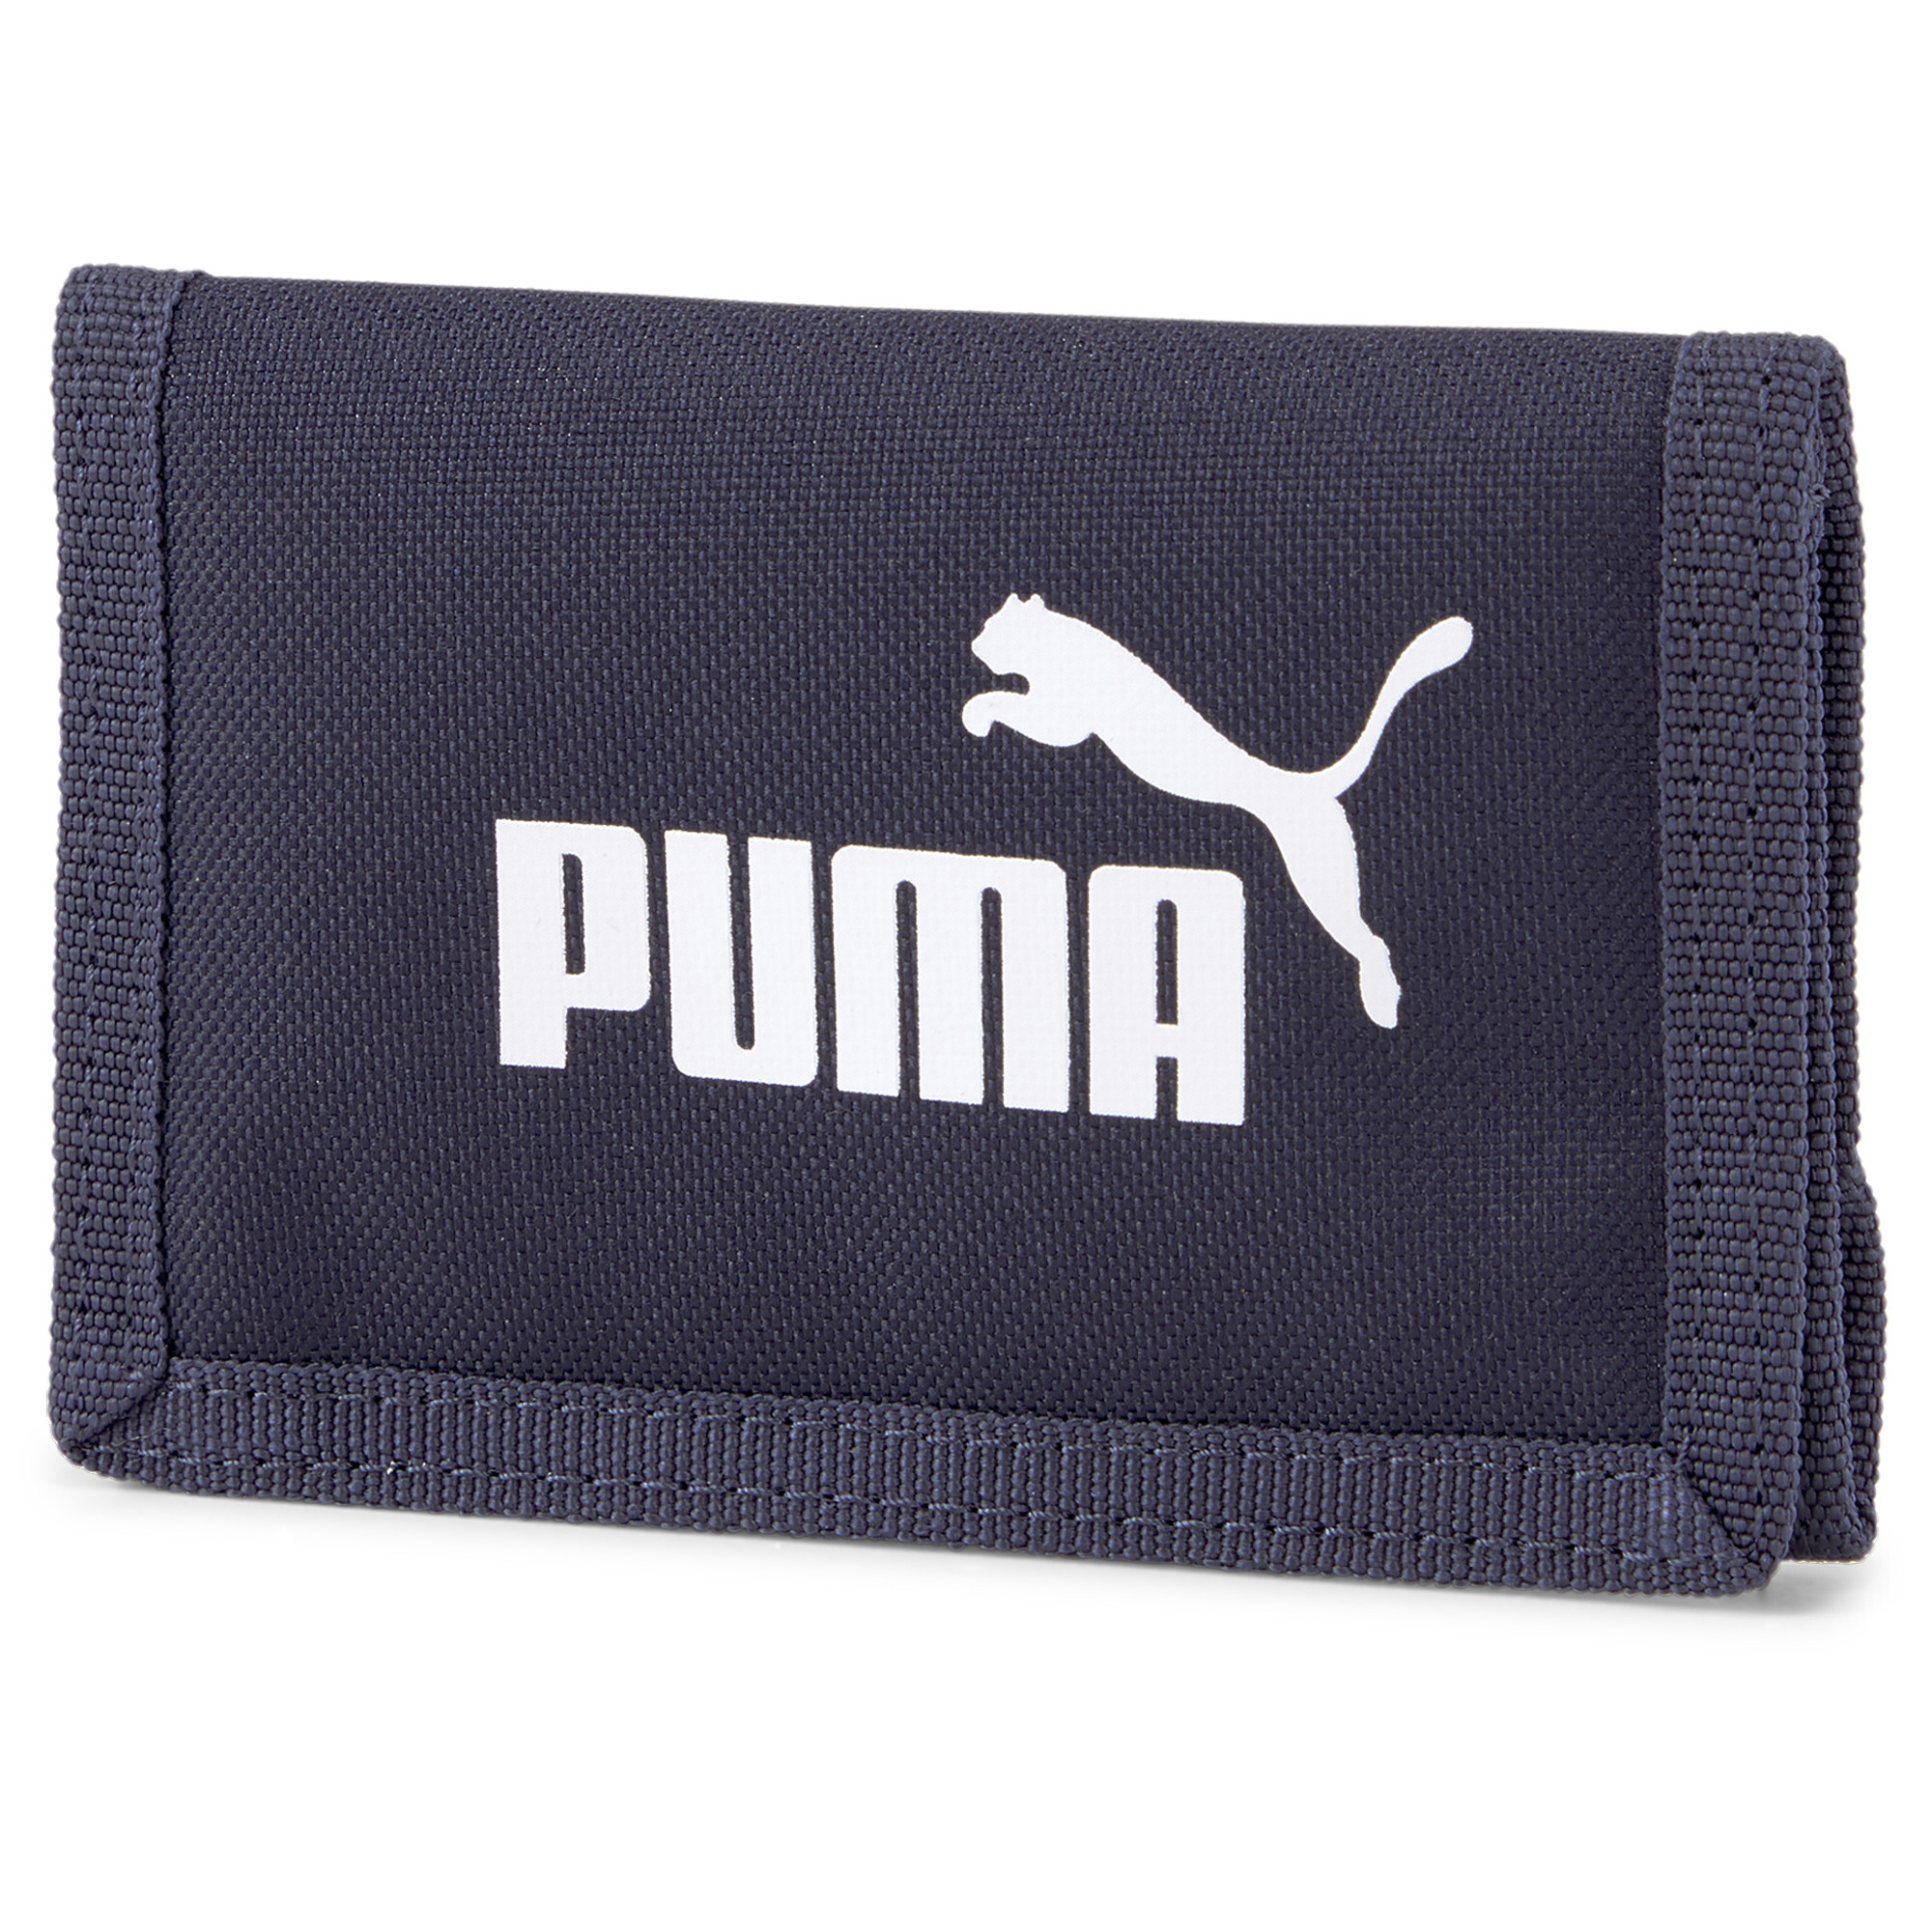 Men's Puma Phase Woven Wallet, Blue, Accessories